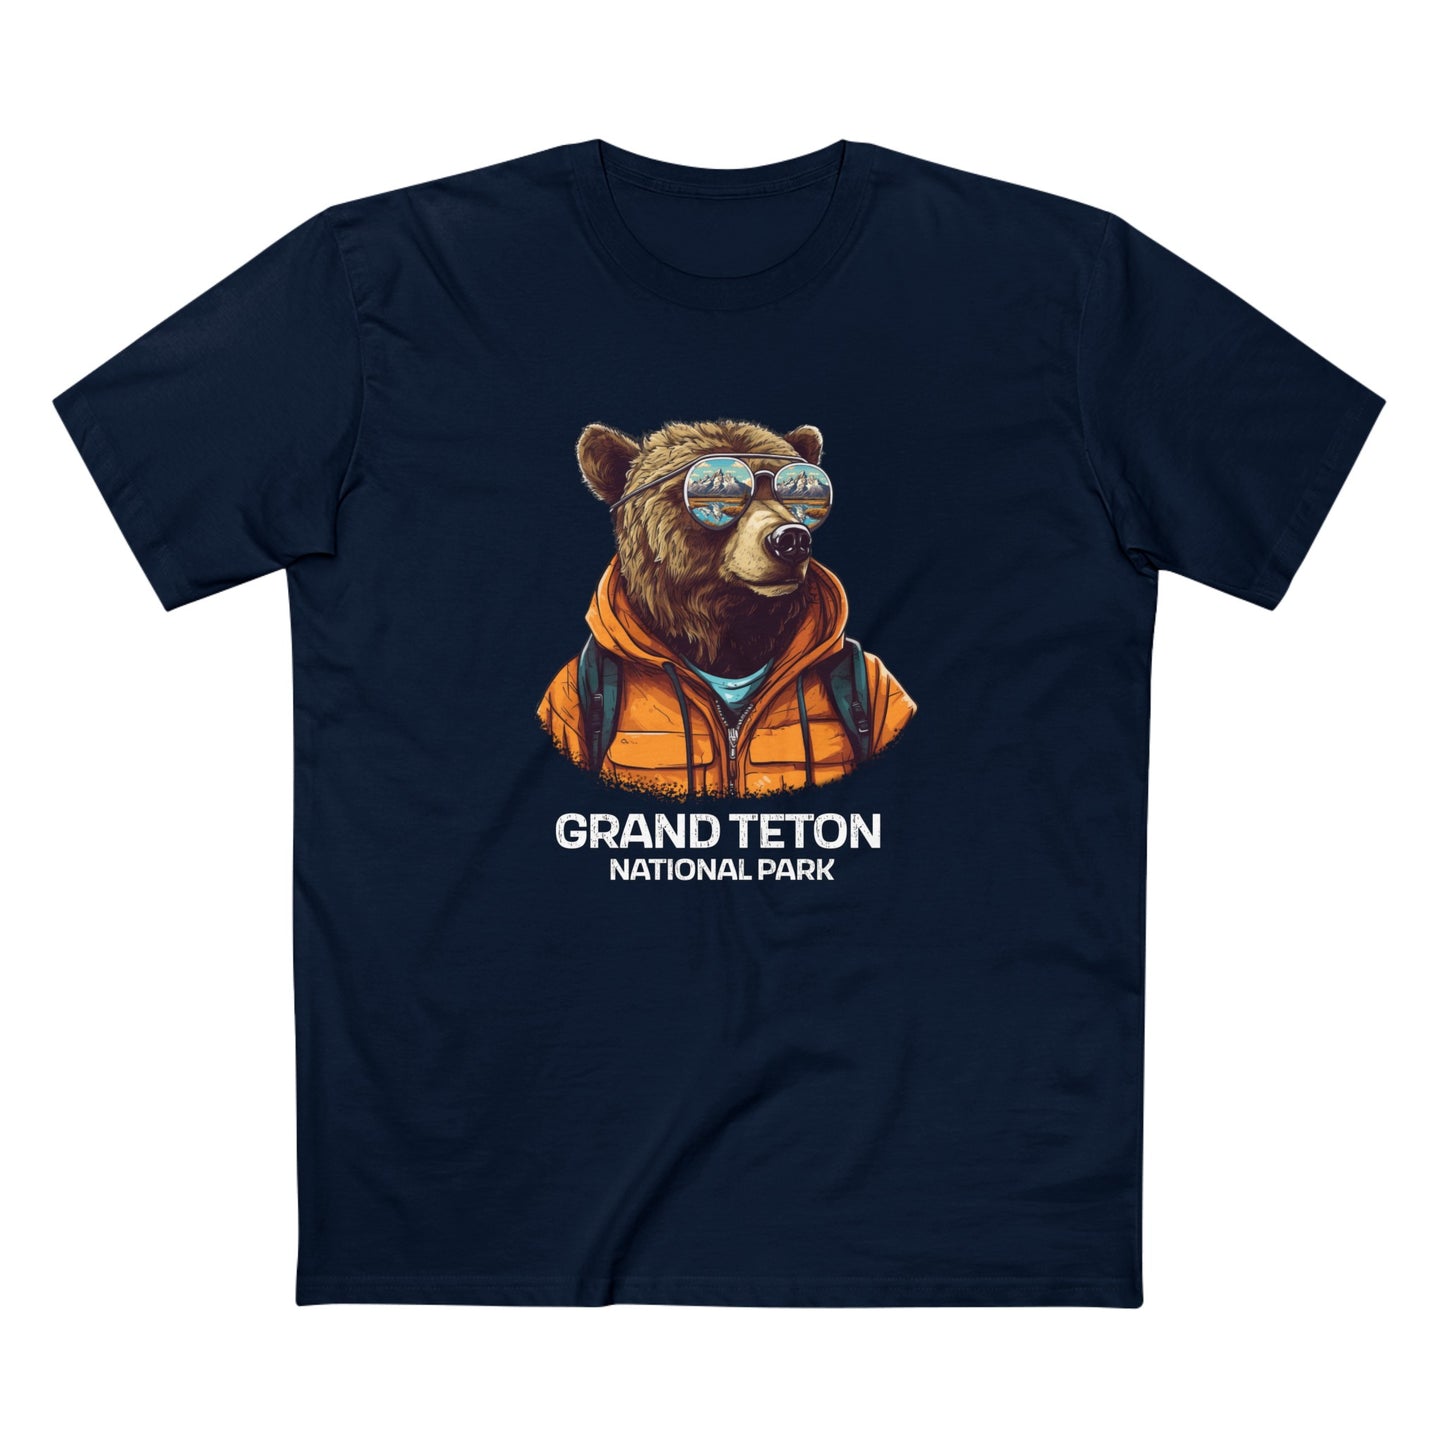 Grand Teton National Park T-Shirt - Grizzly Bear